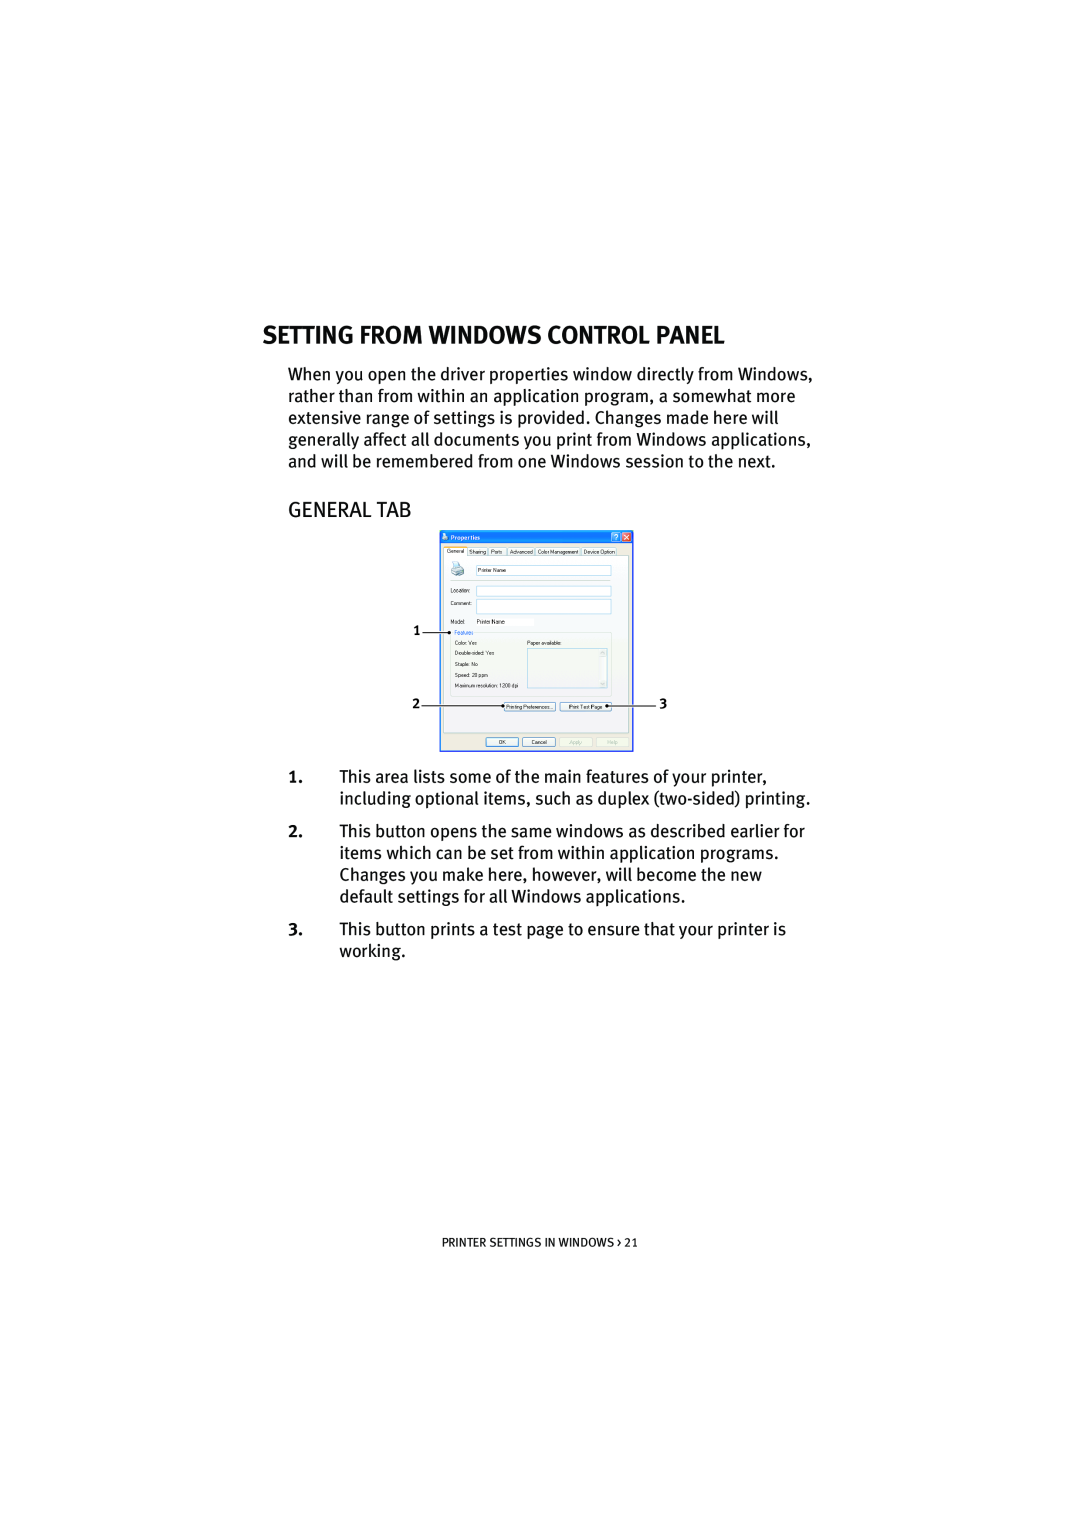 Oki 5200n manual Setting From Windows Control Panel, General Tab 